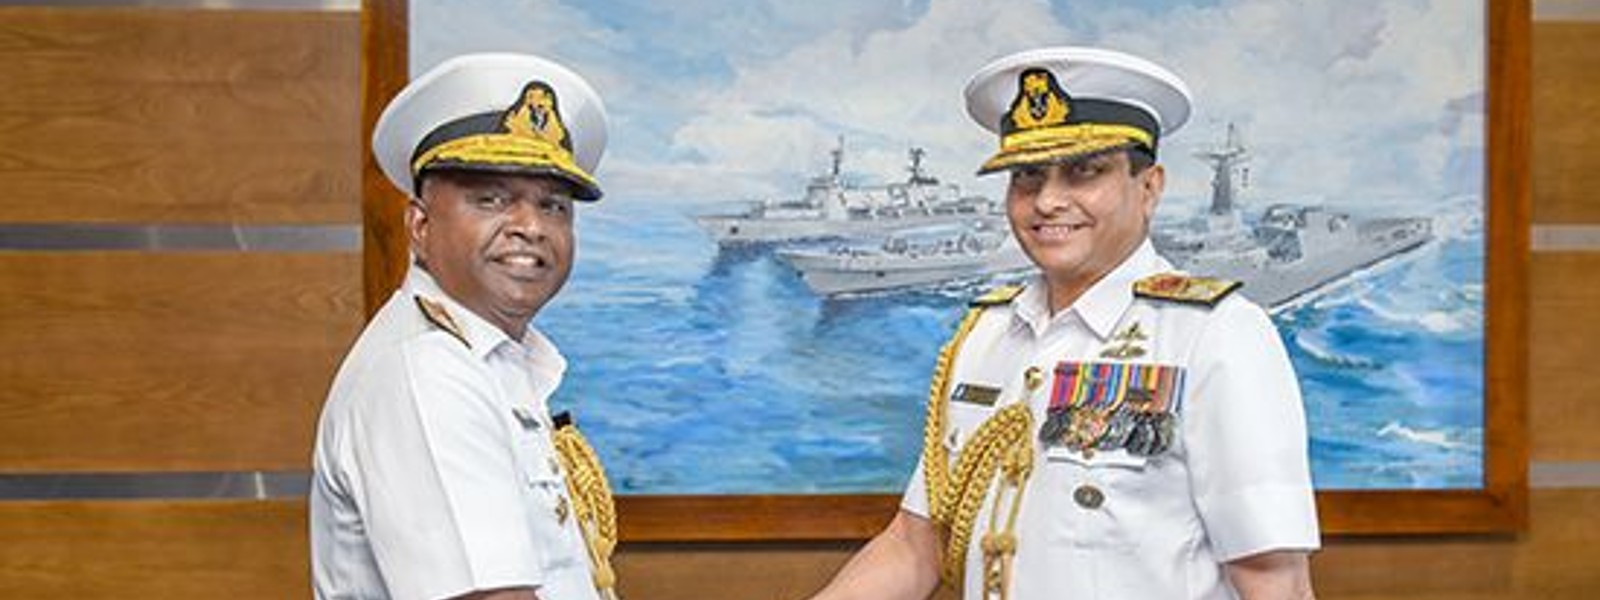 Rear Admiral Kularatne new Chief of Staff